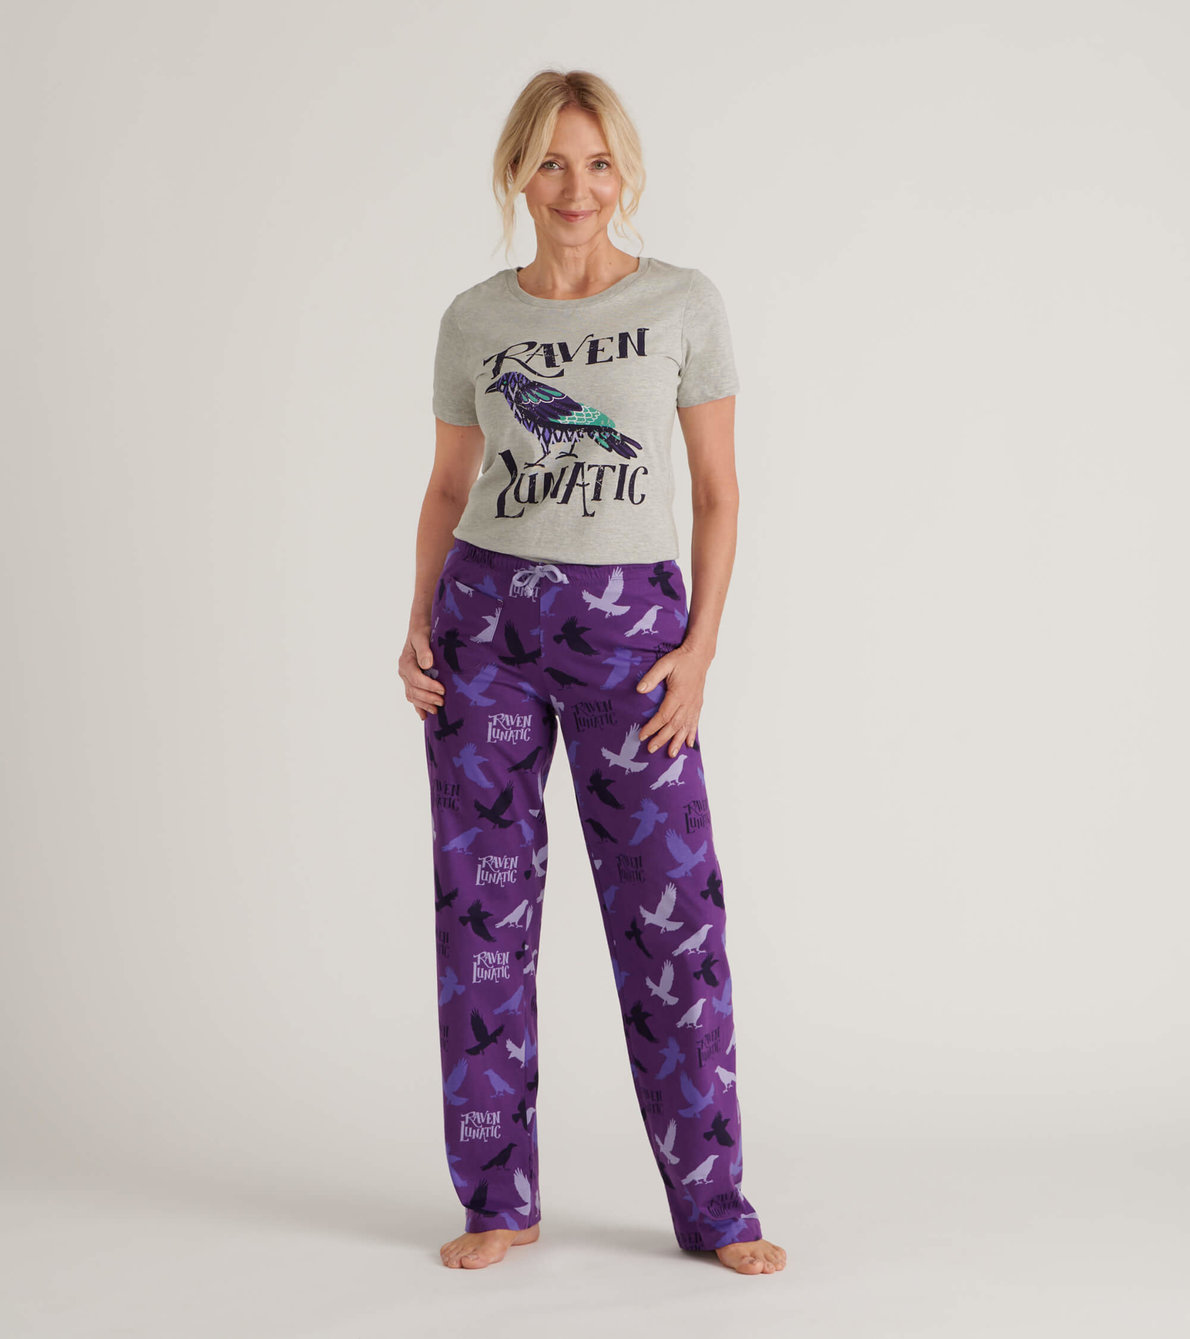 View larger image of Raven Lunatic Women's Jersey Pajama Pants